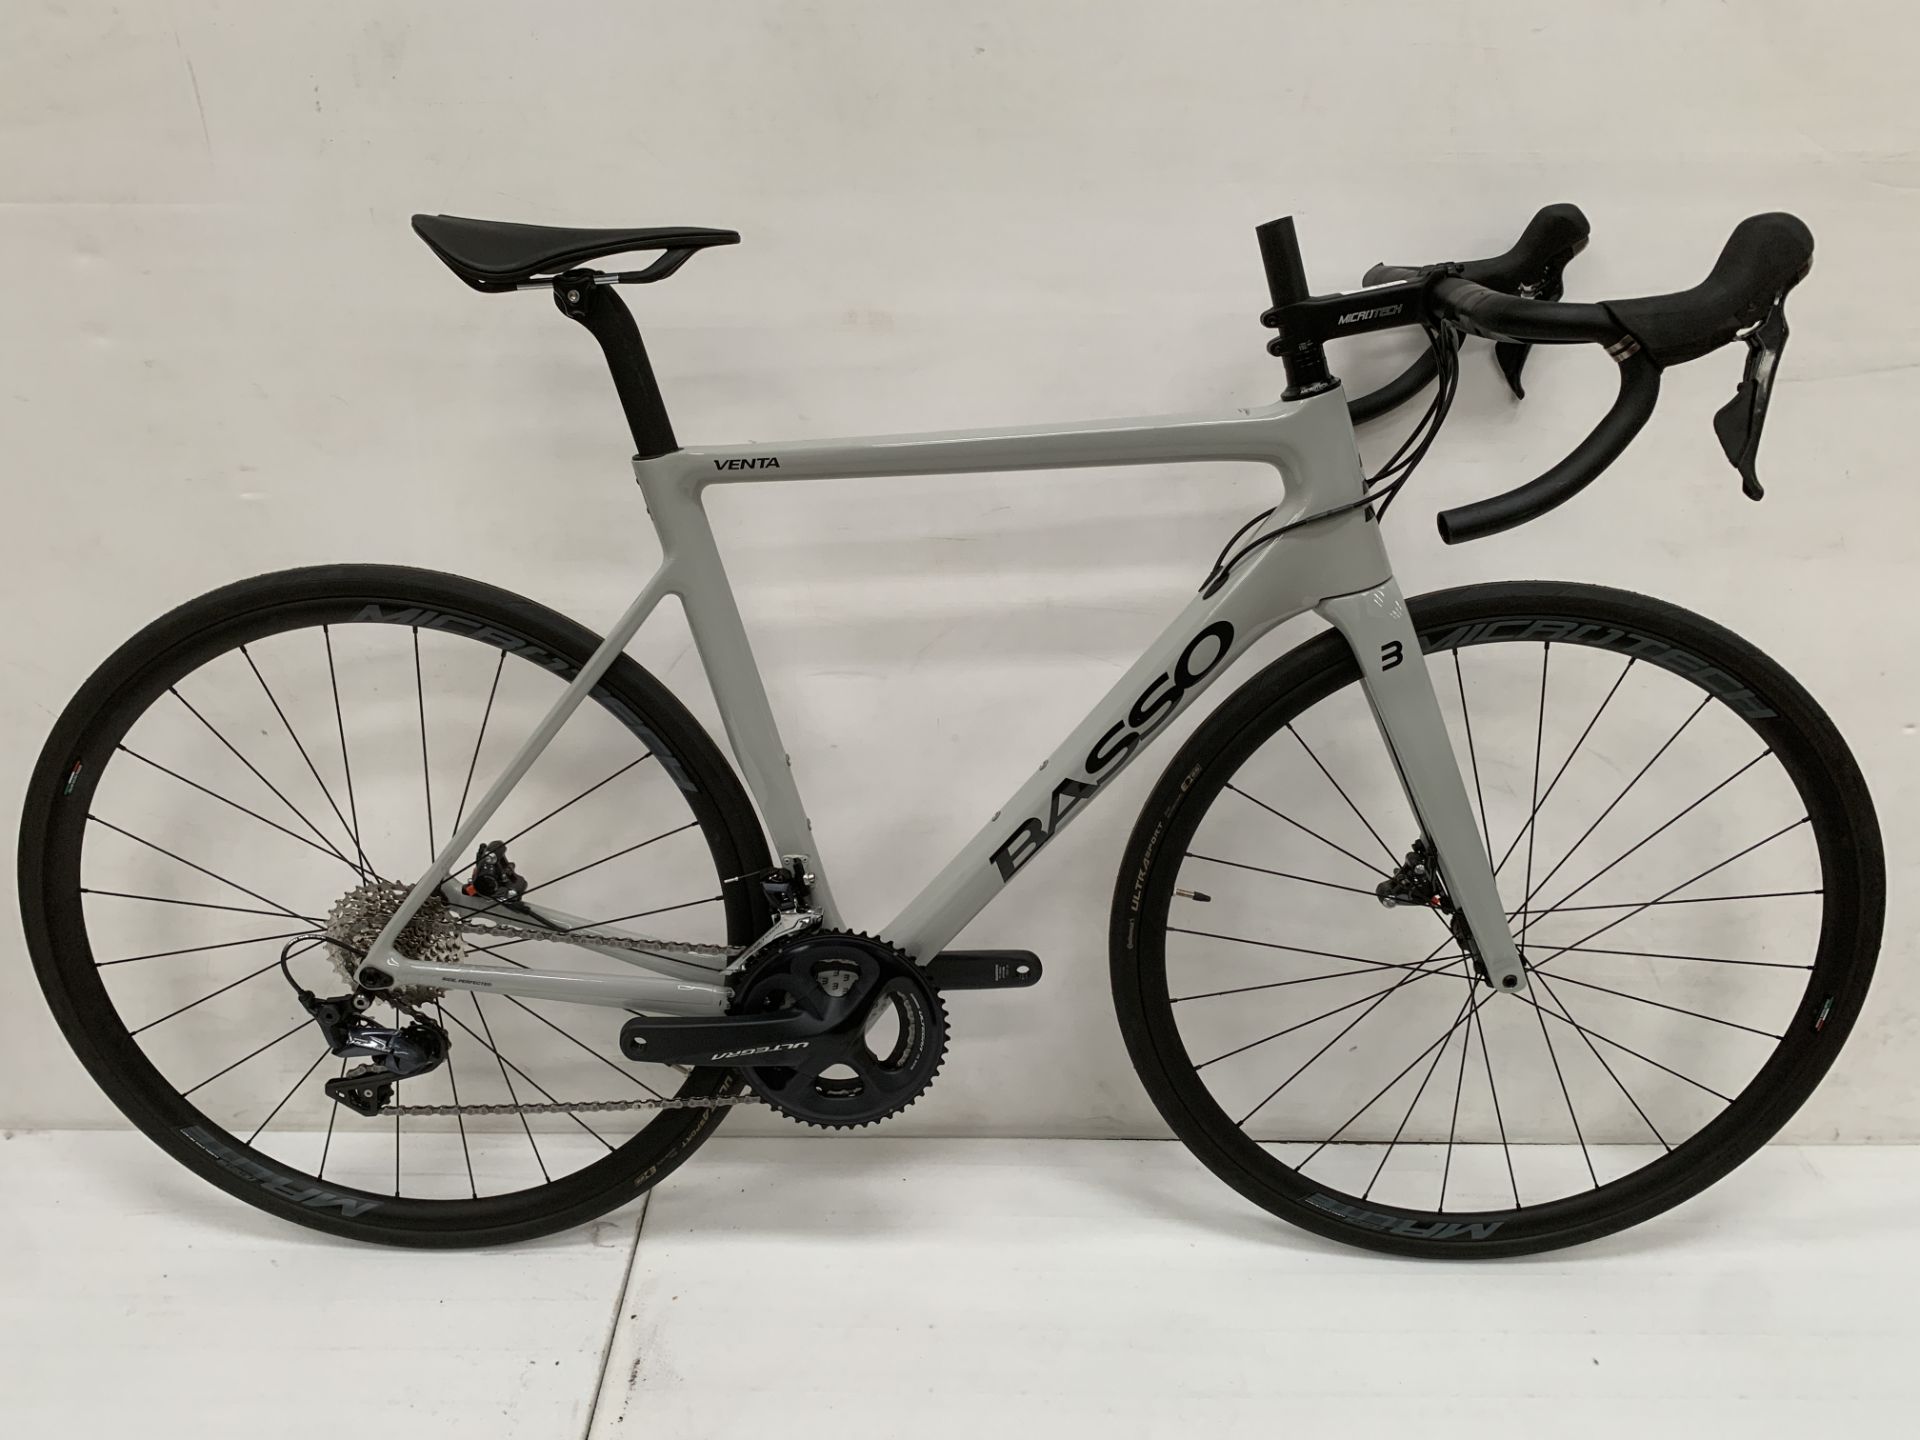 Basso Venta Disk 'Stone Grey' Bicycle. RRP £2899